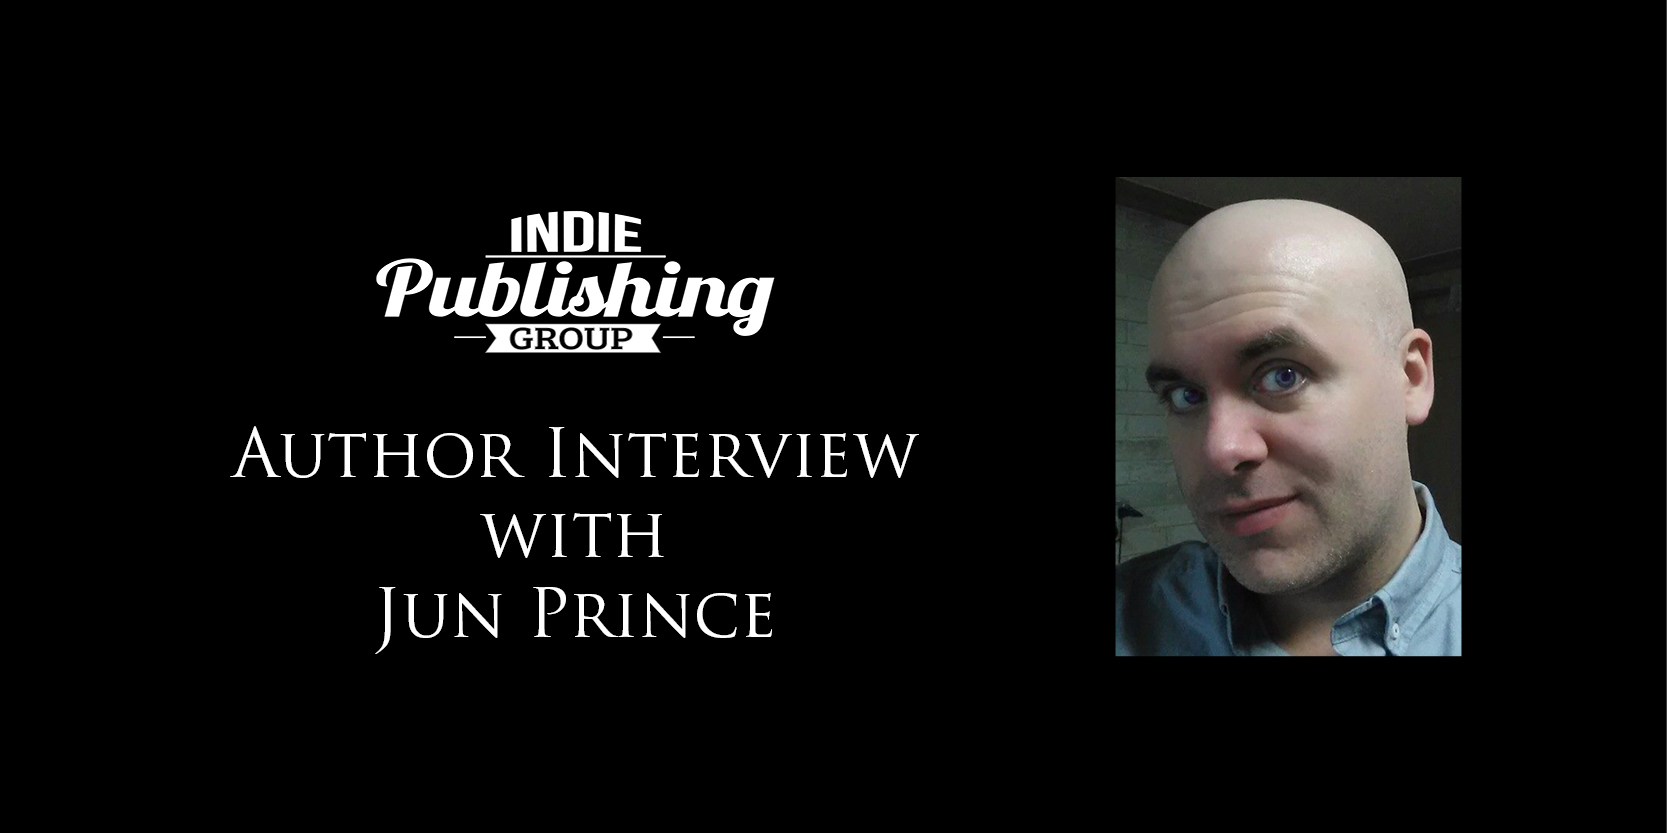 Author Interview Jun Prince|The Beautiful Dead - Ebook|The Beautiful Dead - Ebook|Jun Prince The Beautiful Dead